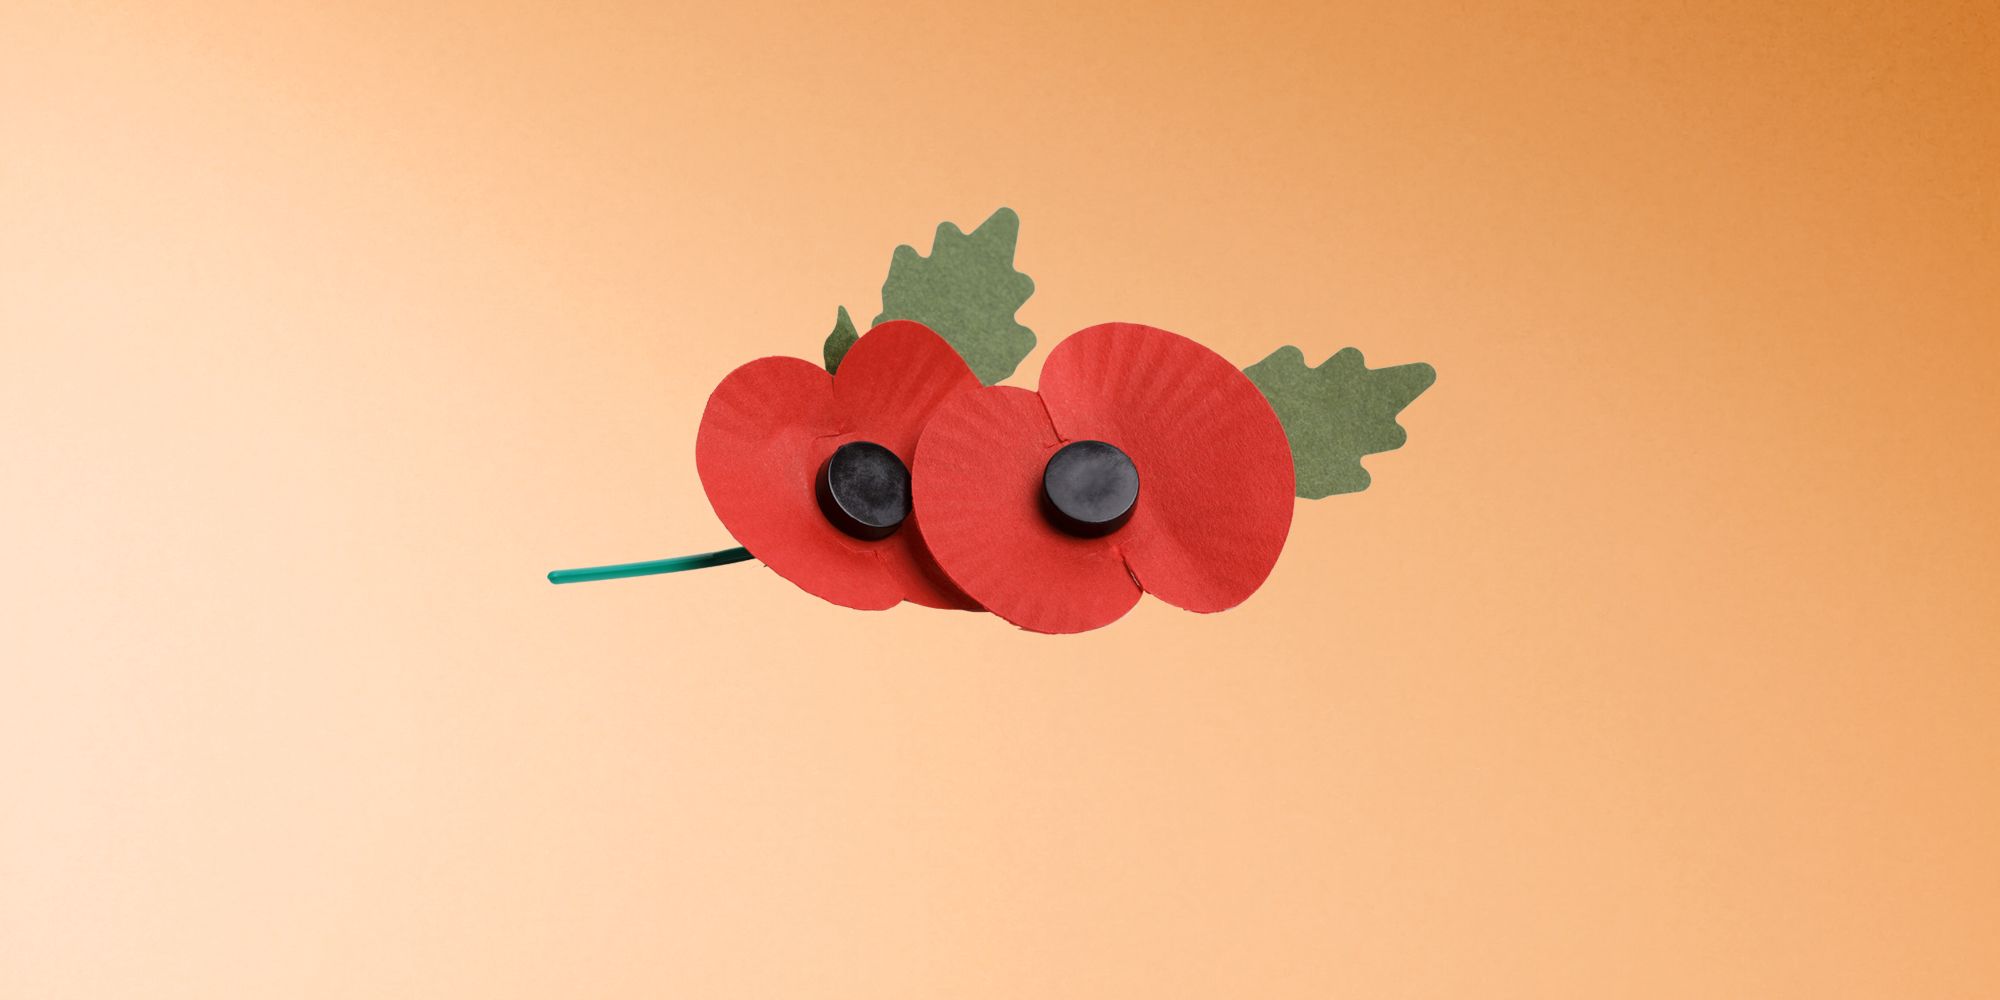 buy remembrance poppy online